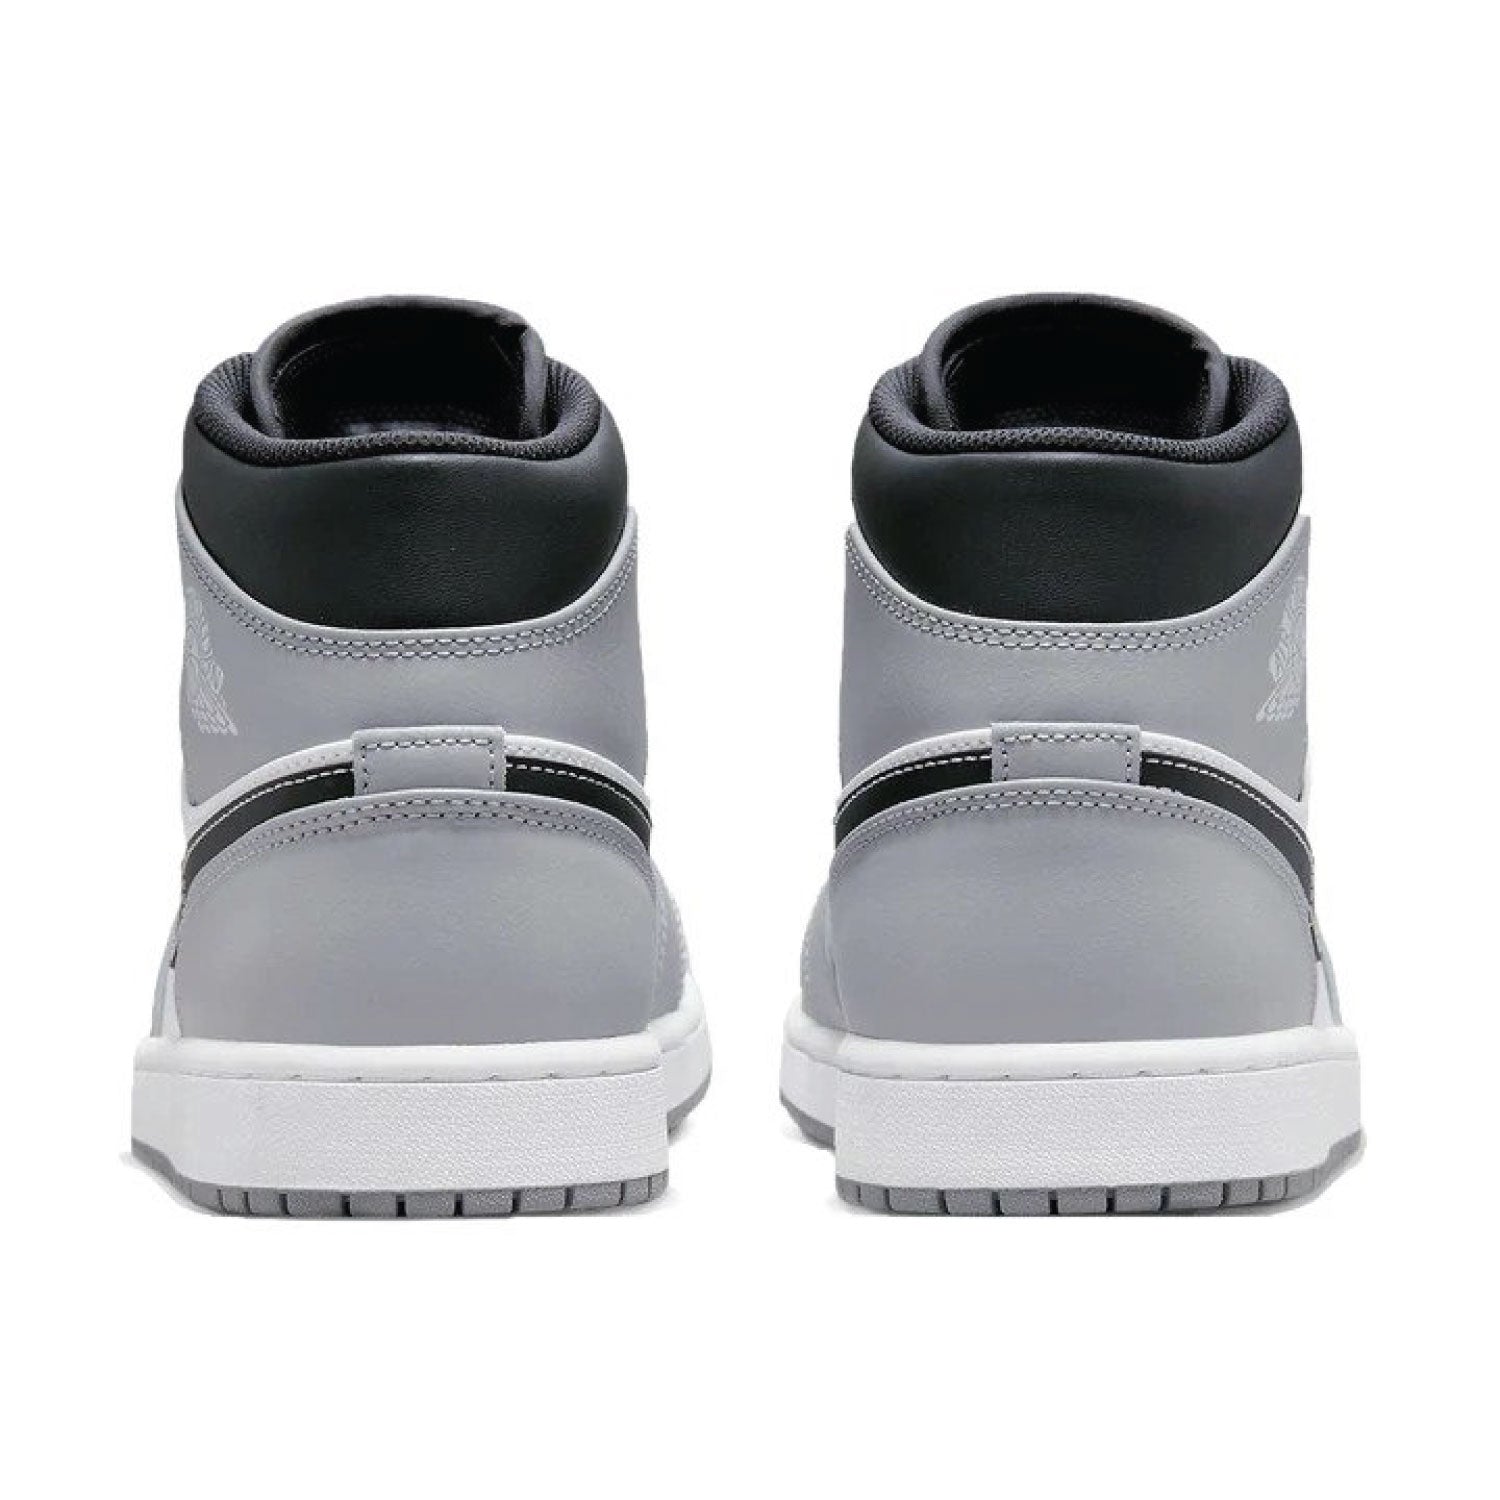 Jordan 1 Mid Light Smoke Grey Review & On Feet! 